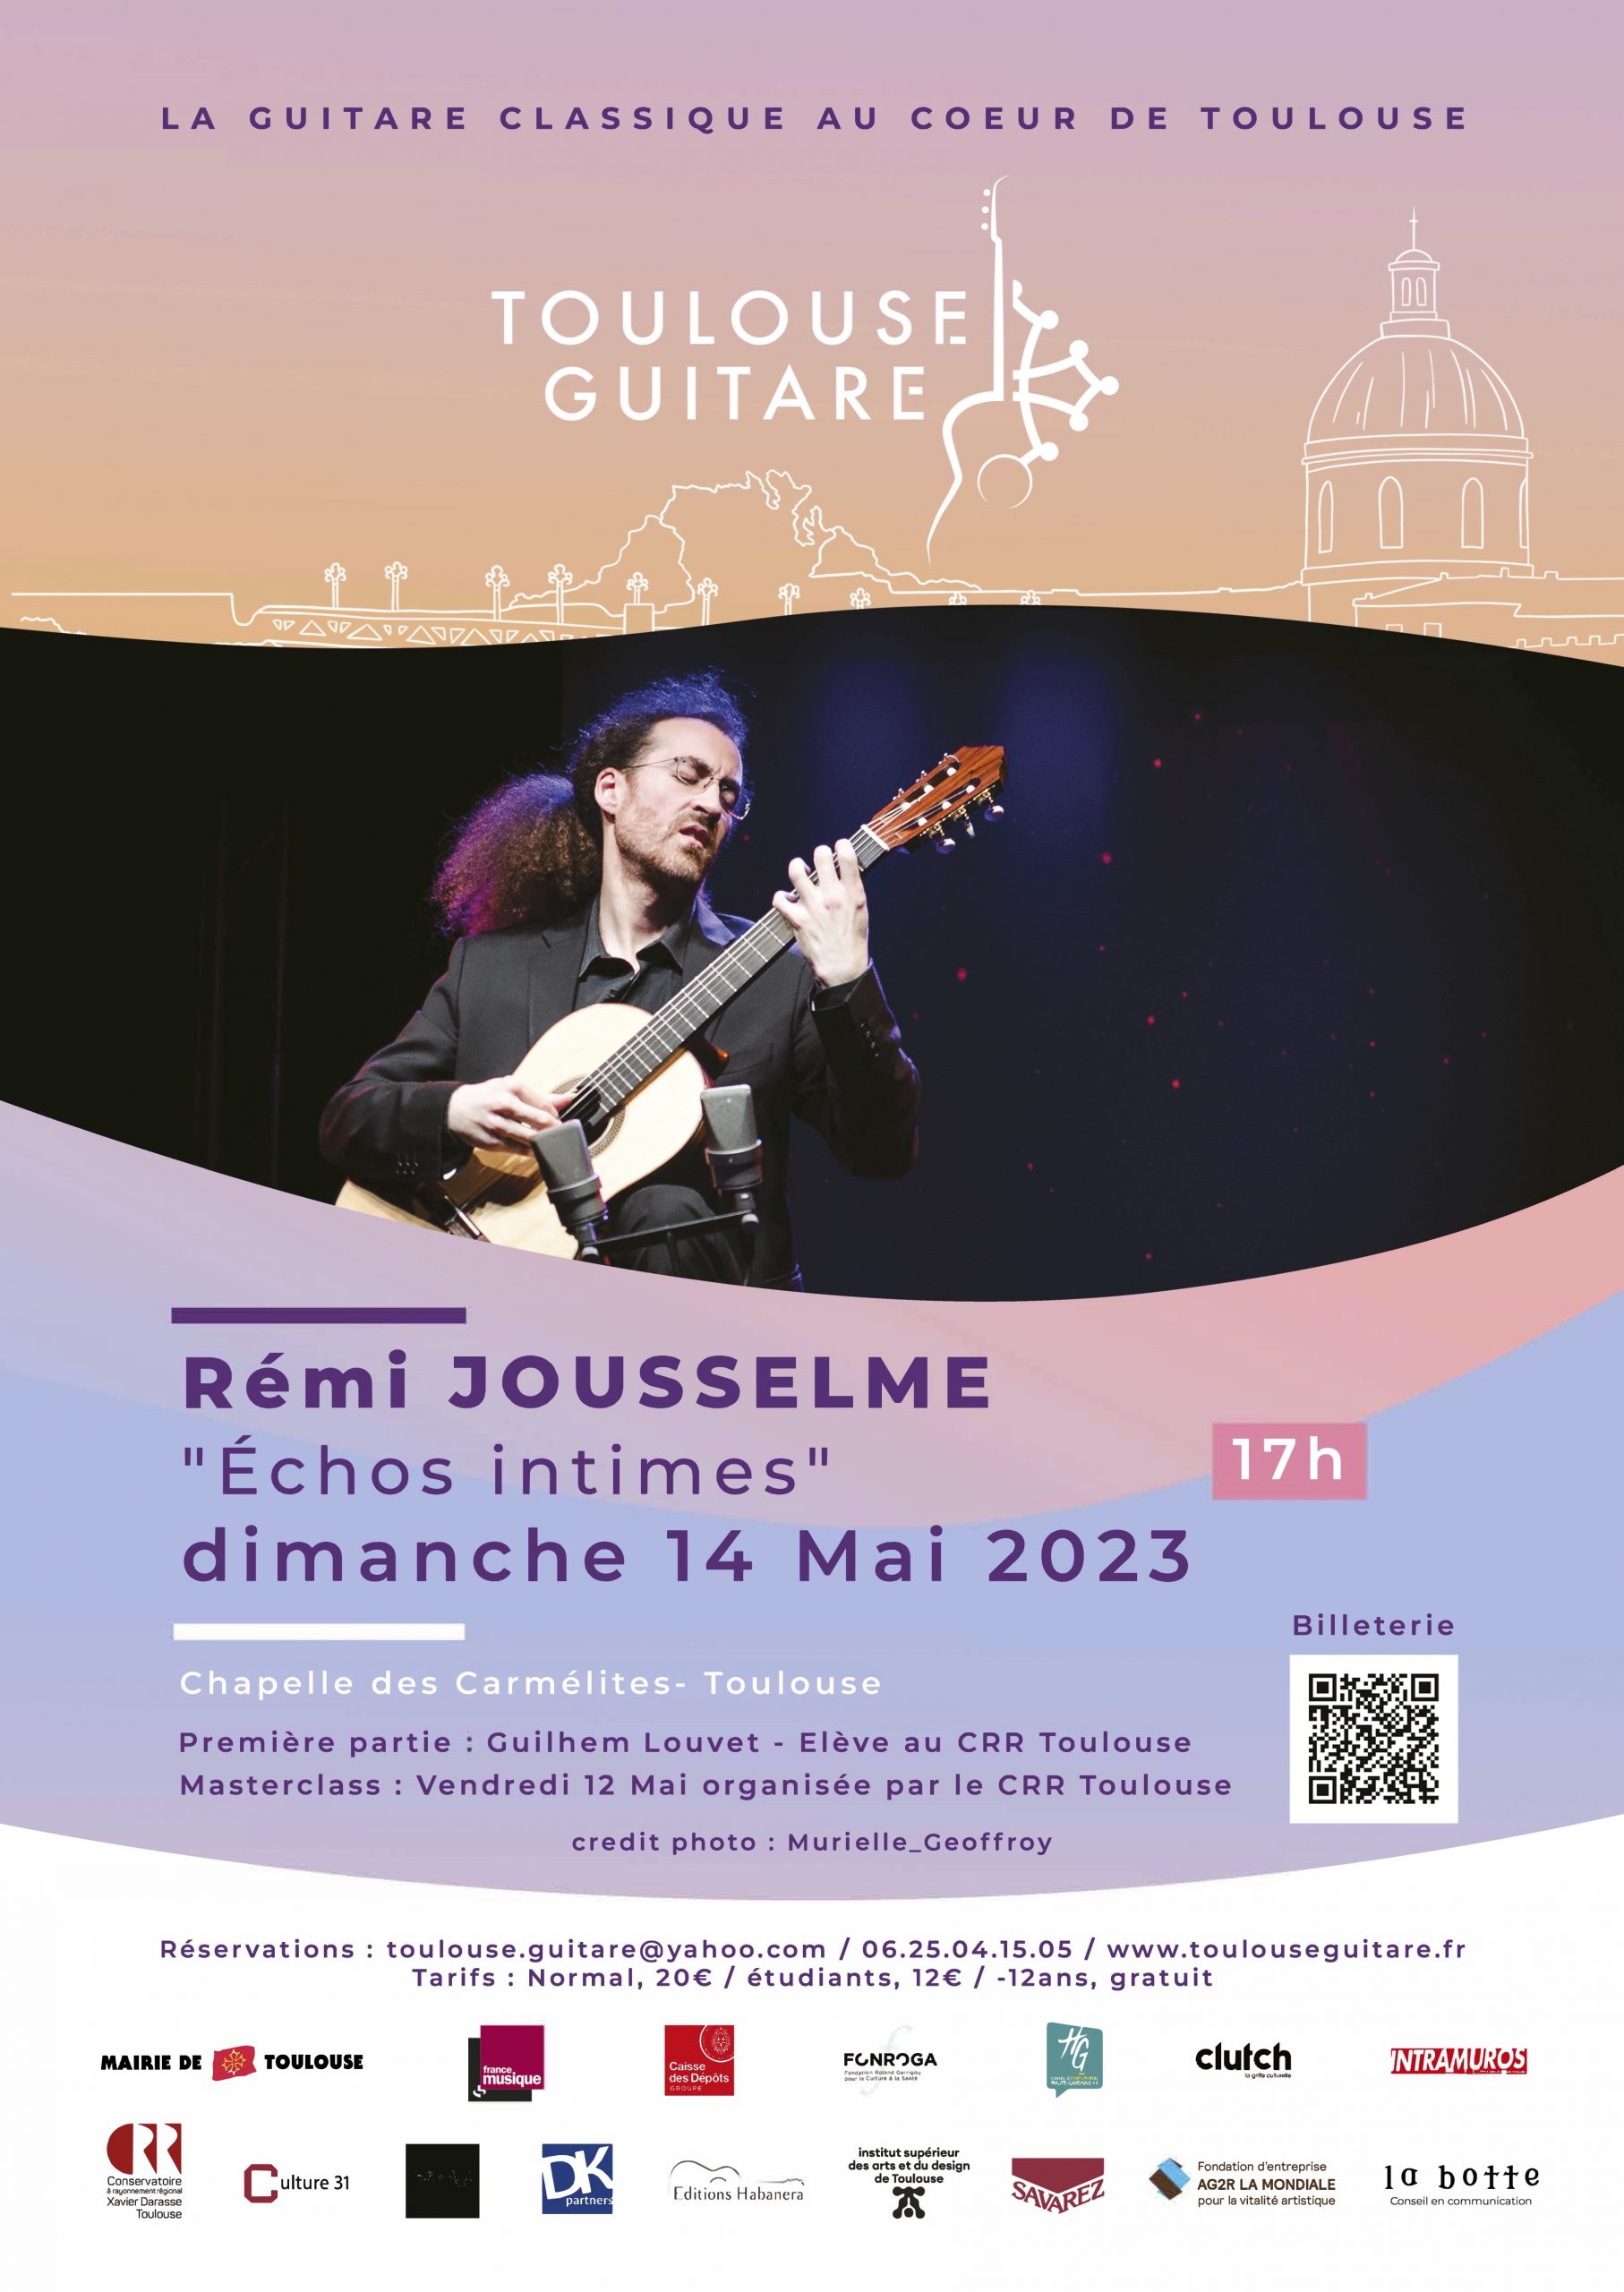 Toulouse Guitare Rémi Jousselme